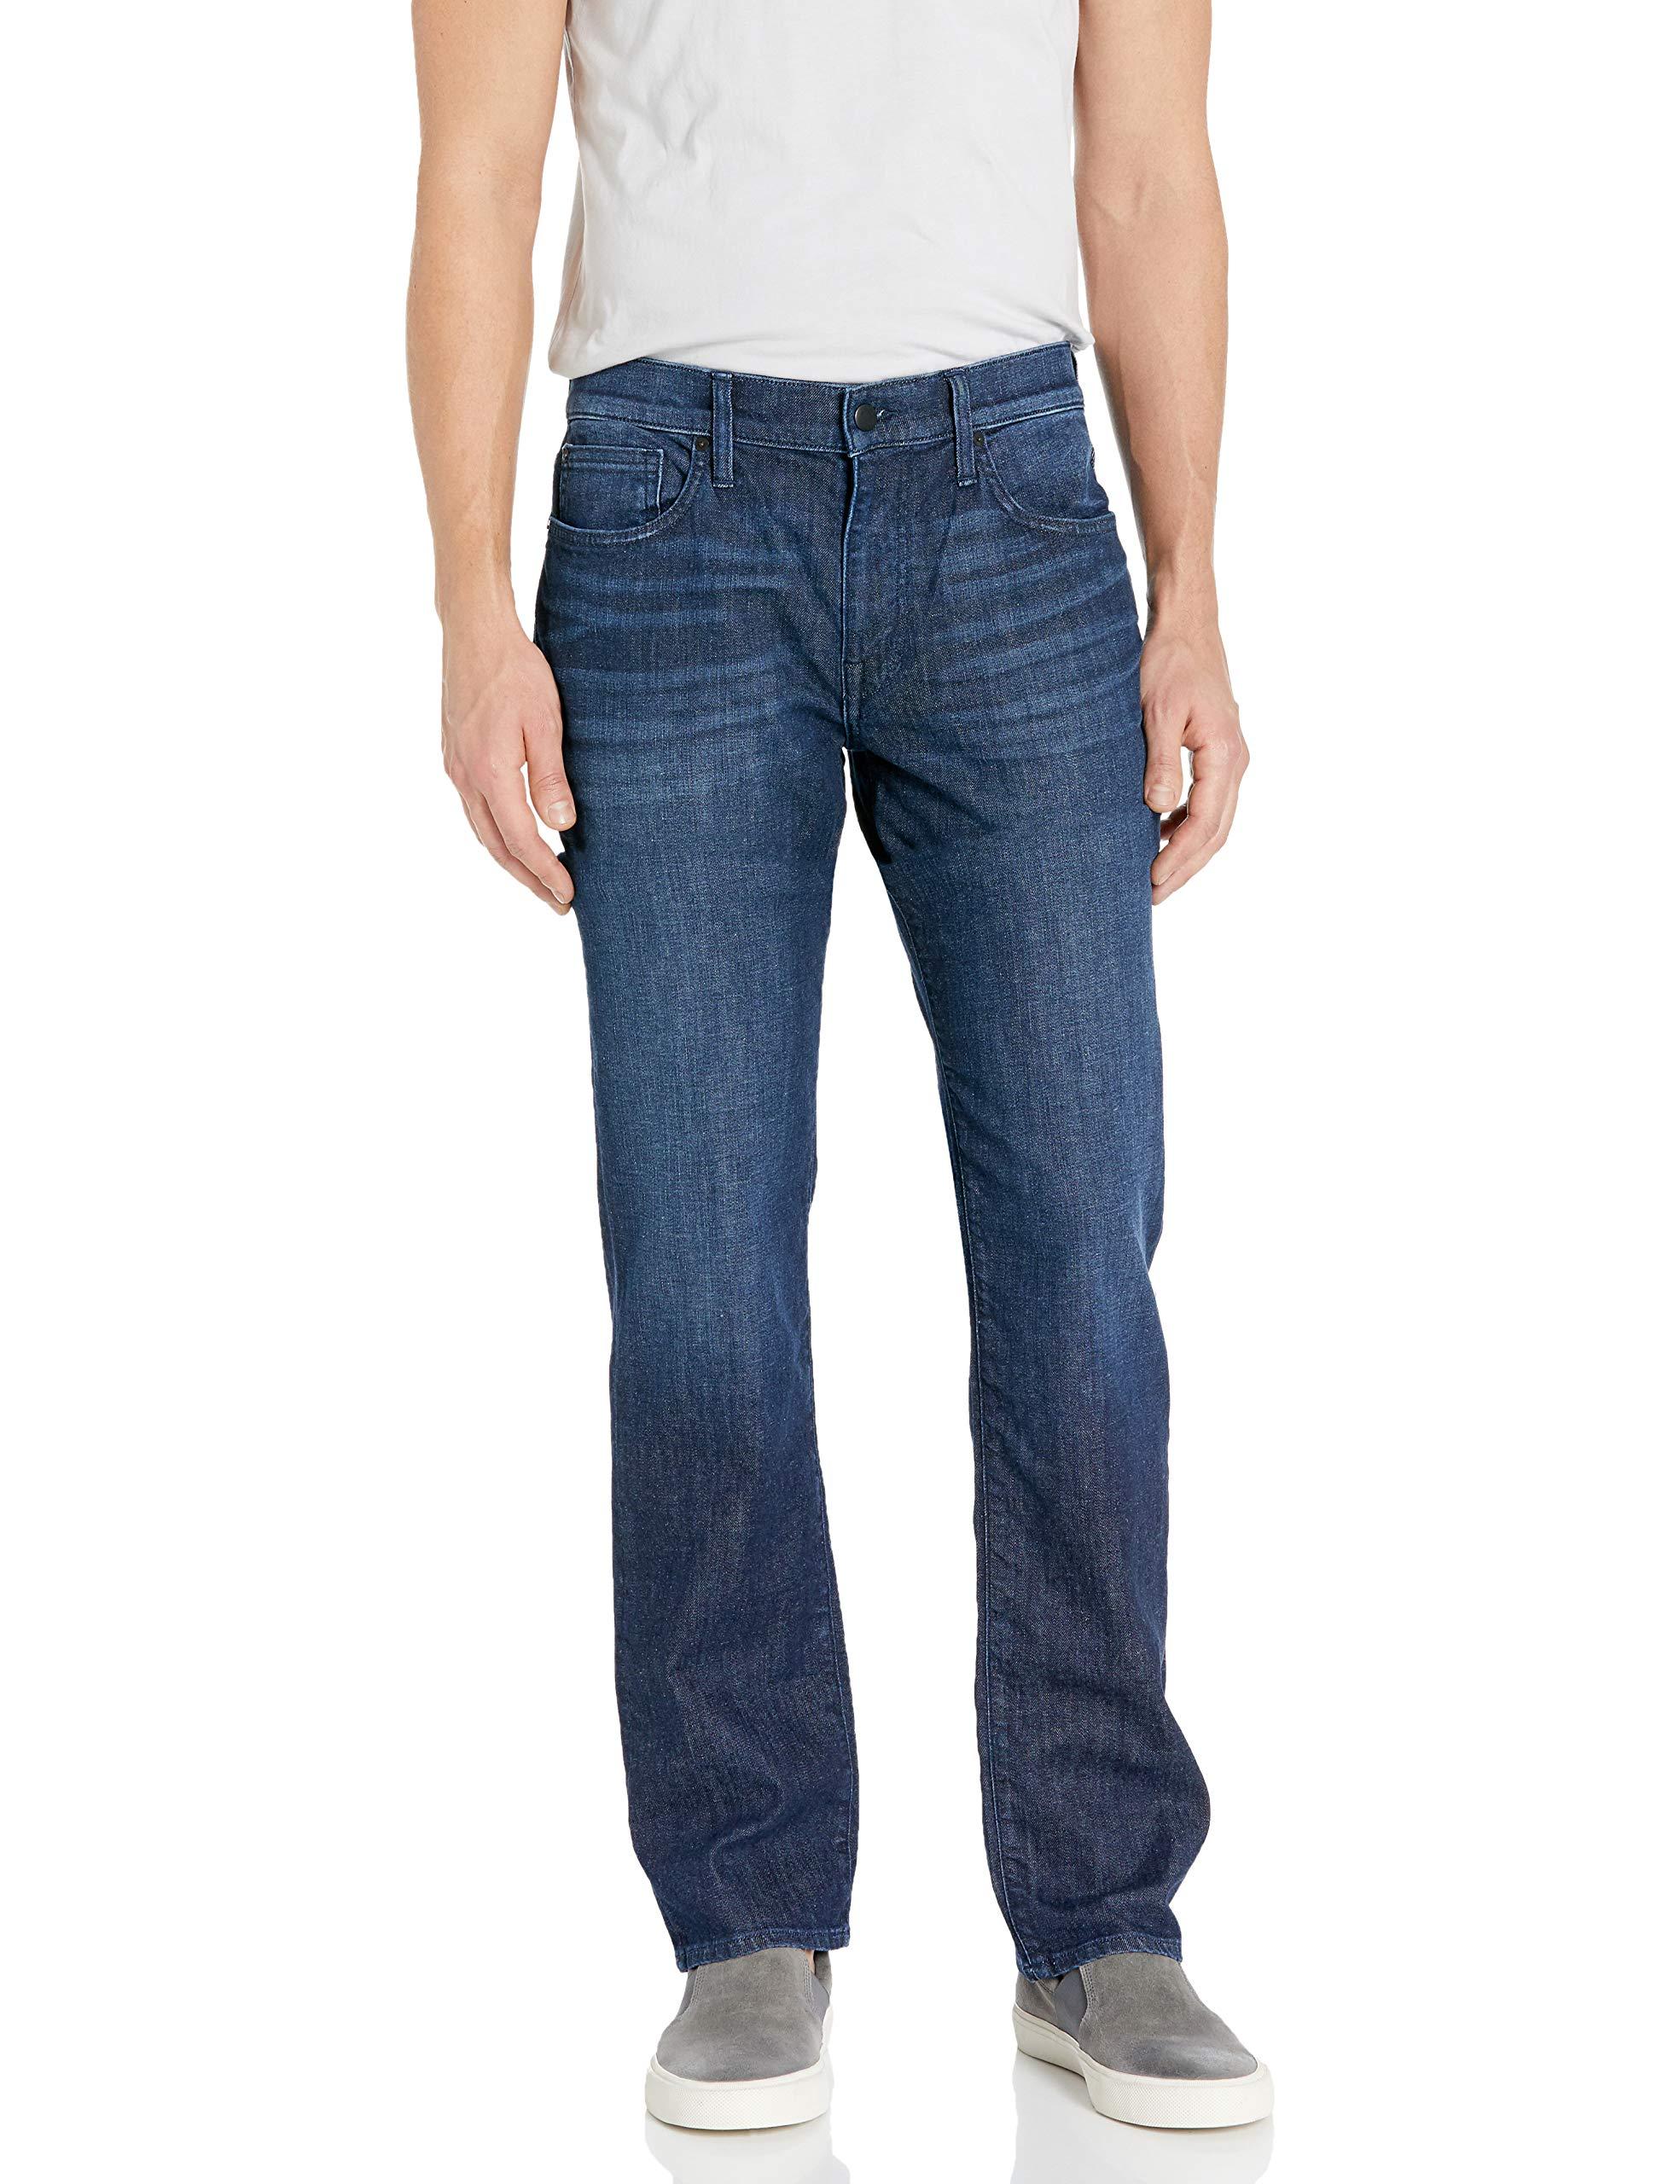 Joe's Jeans Denim Classic Fit Straight Leg Jeans in Blue for Men - Lyst